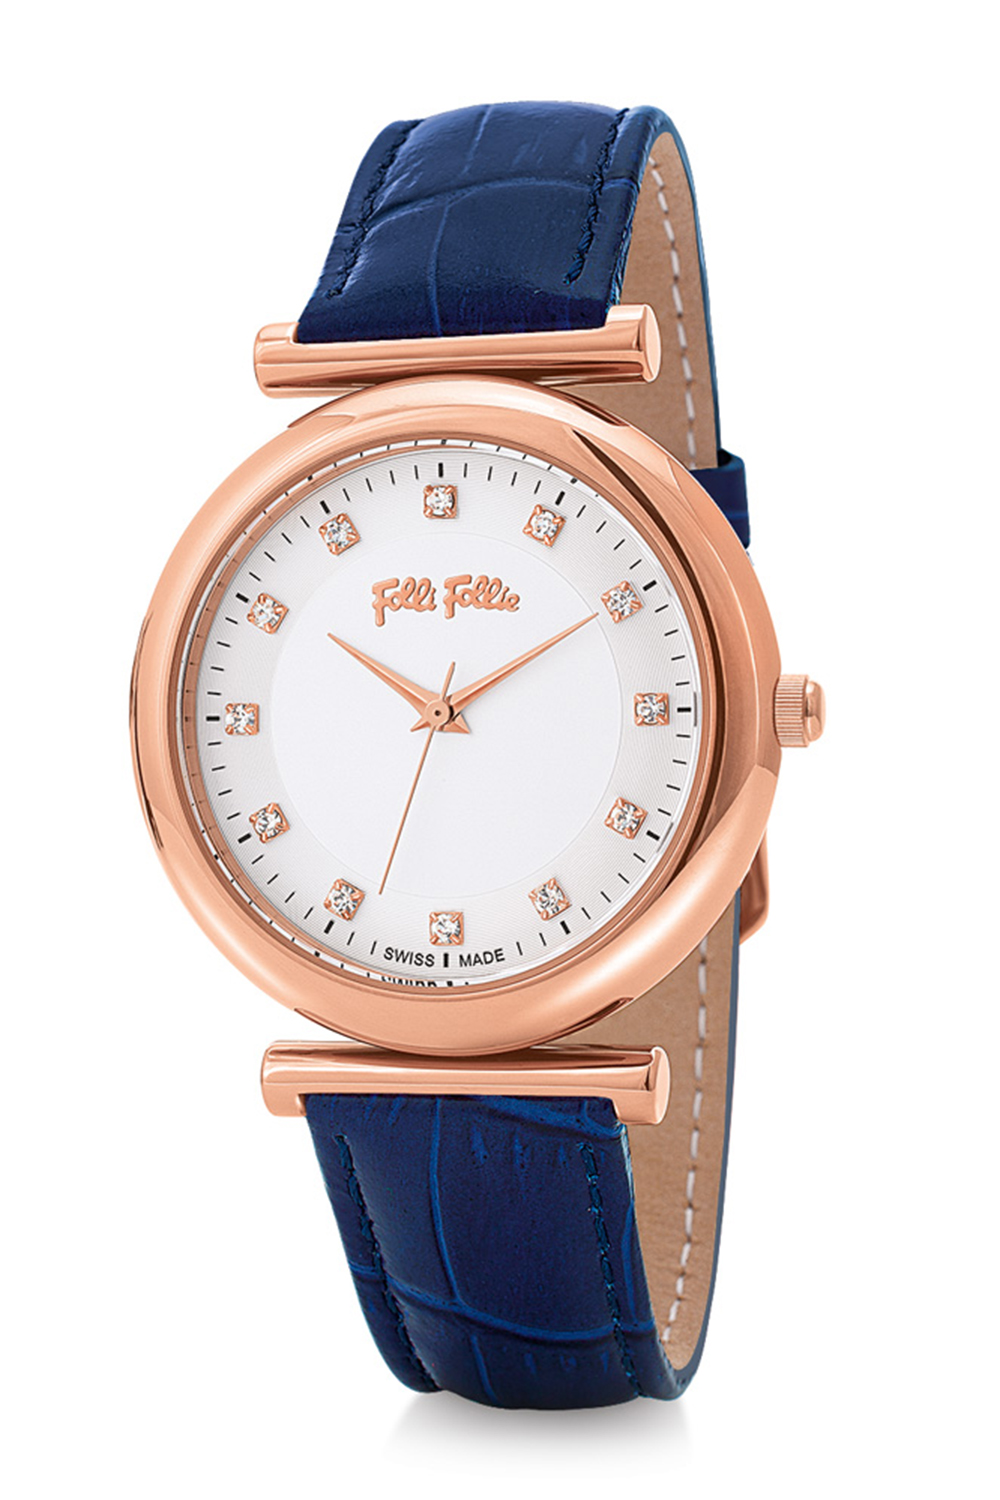 FOLLI FOLLIE – Γυναικείο ρολόι με δερμάτινο λουράκι FOLLI FOLLIE SPARKLE CHIC μπλε WF16R023SSS-DB